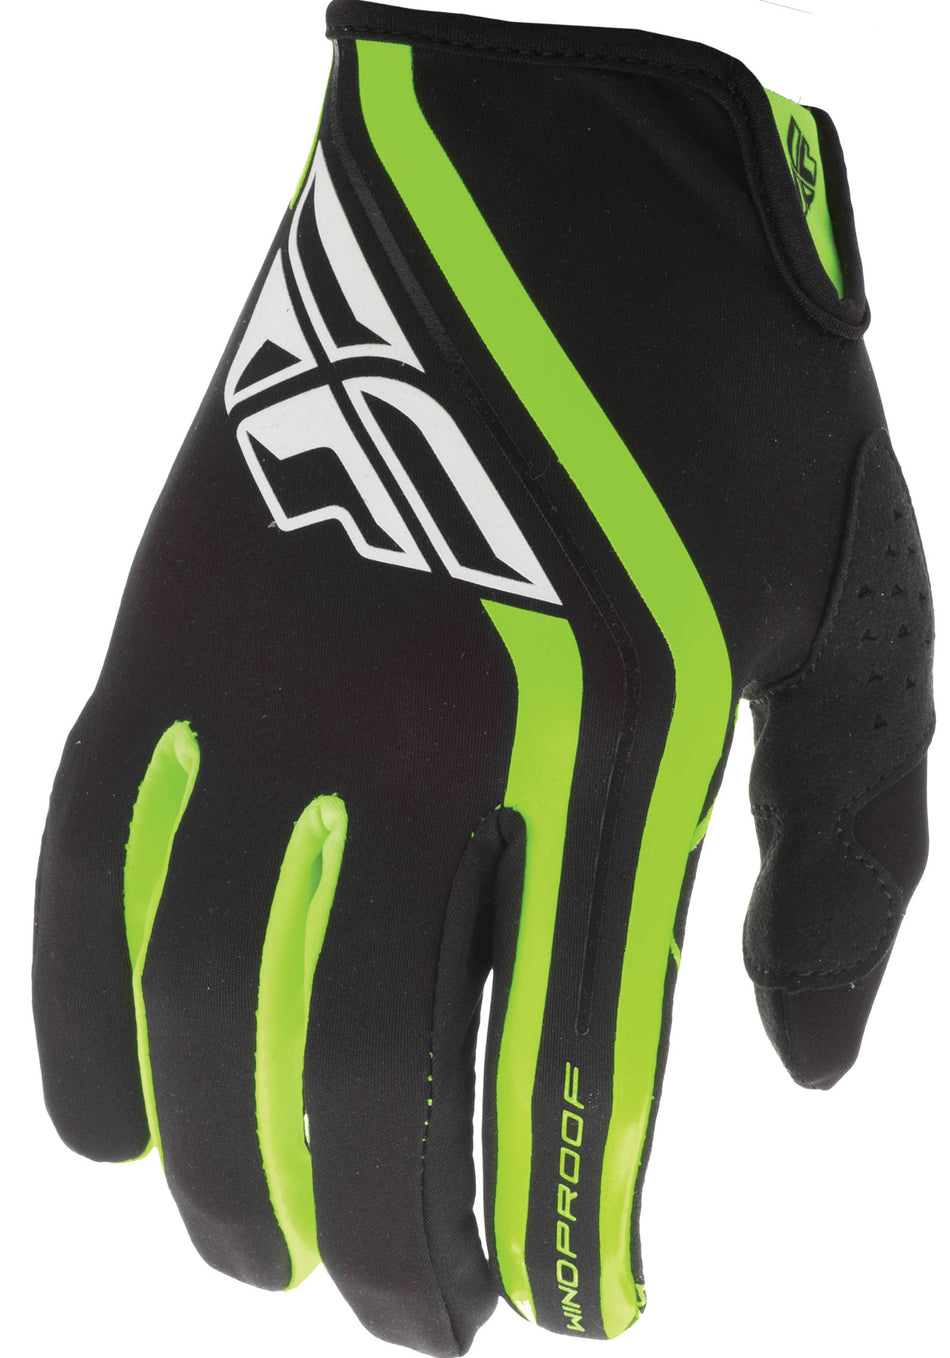 FLY RACING Windproof Gloves Black/Hi-Vis Sz 12 371-14912